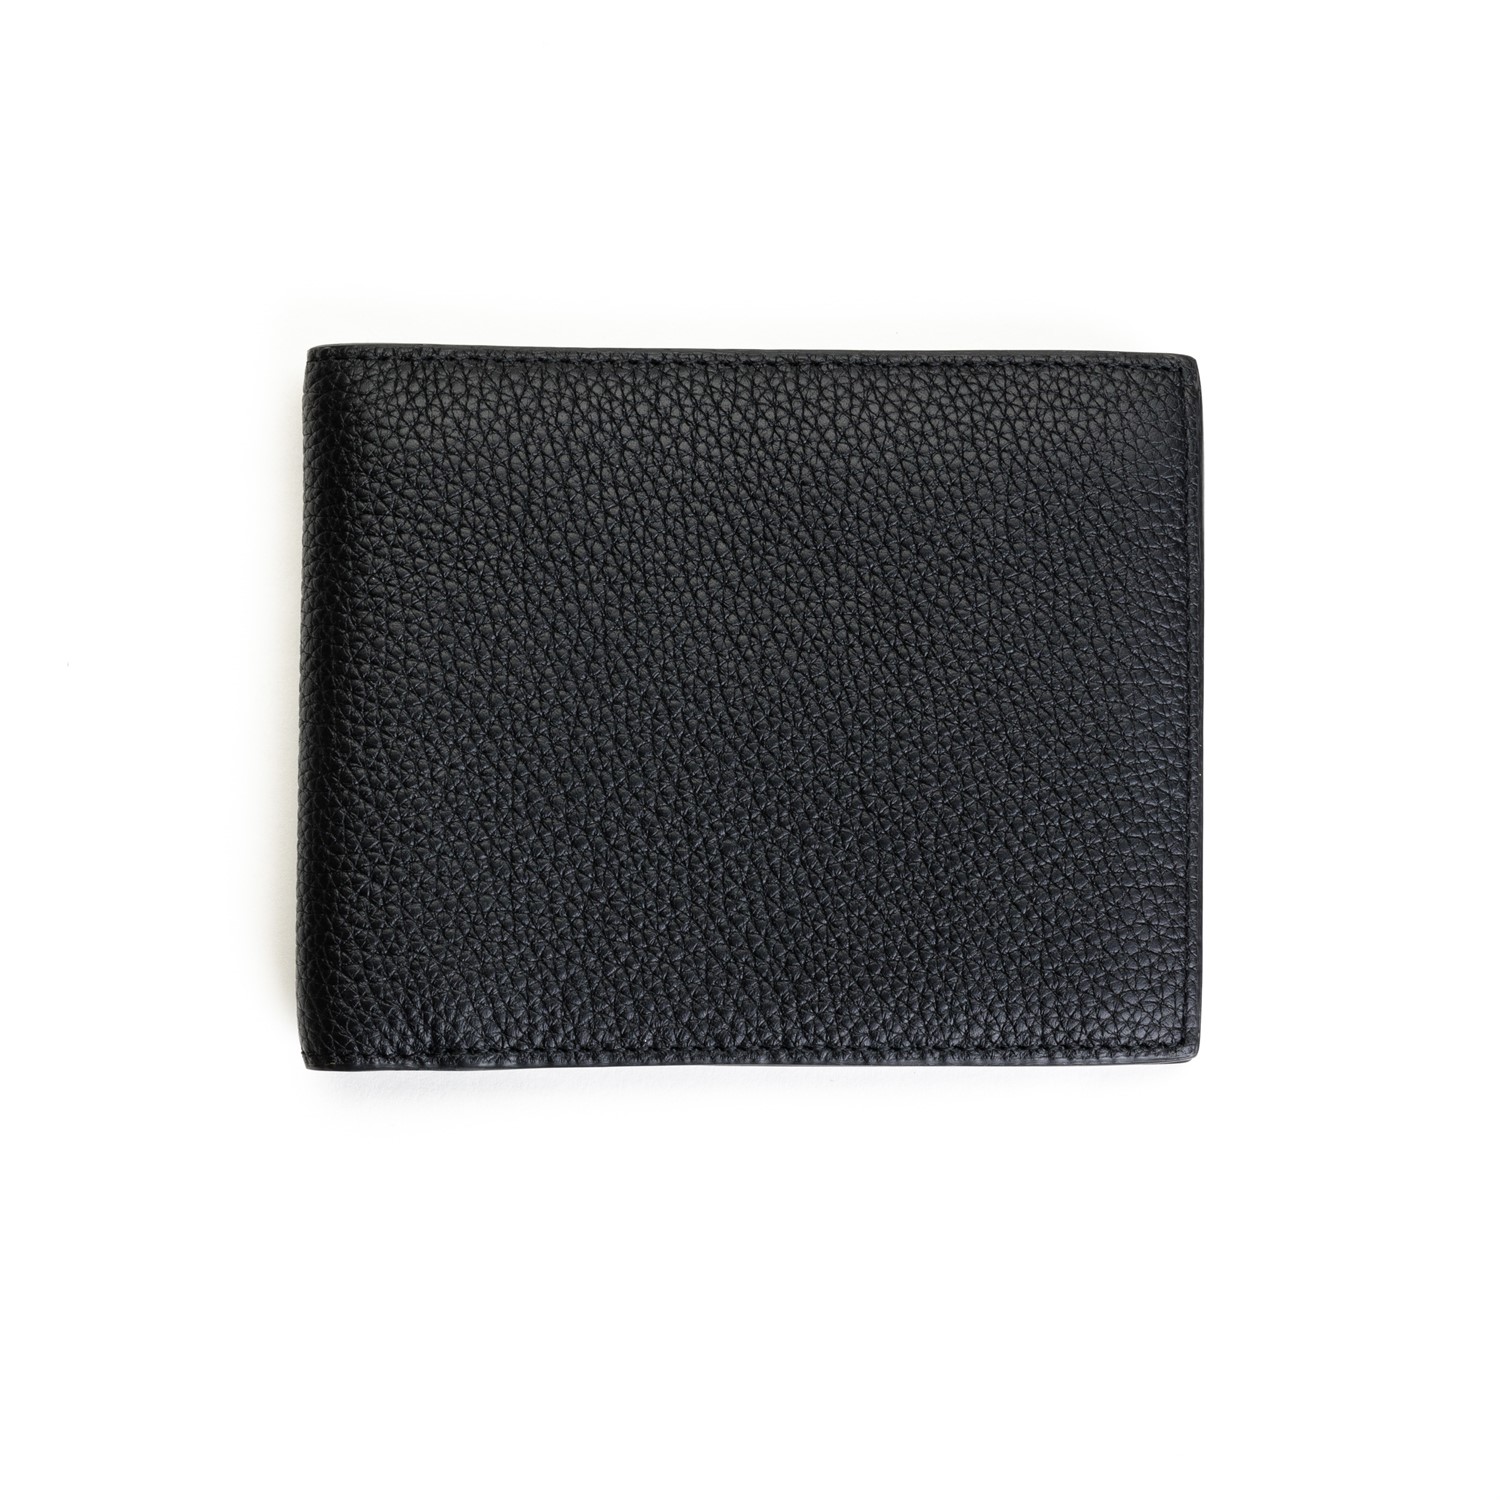 Purchase Wholesale genuine leather handbags. Free Returns & Net 60